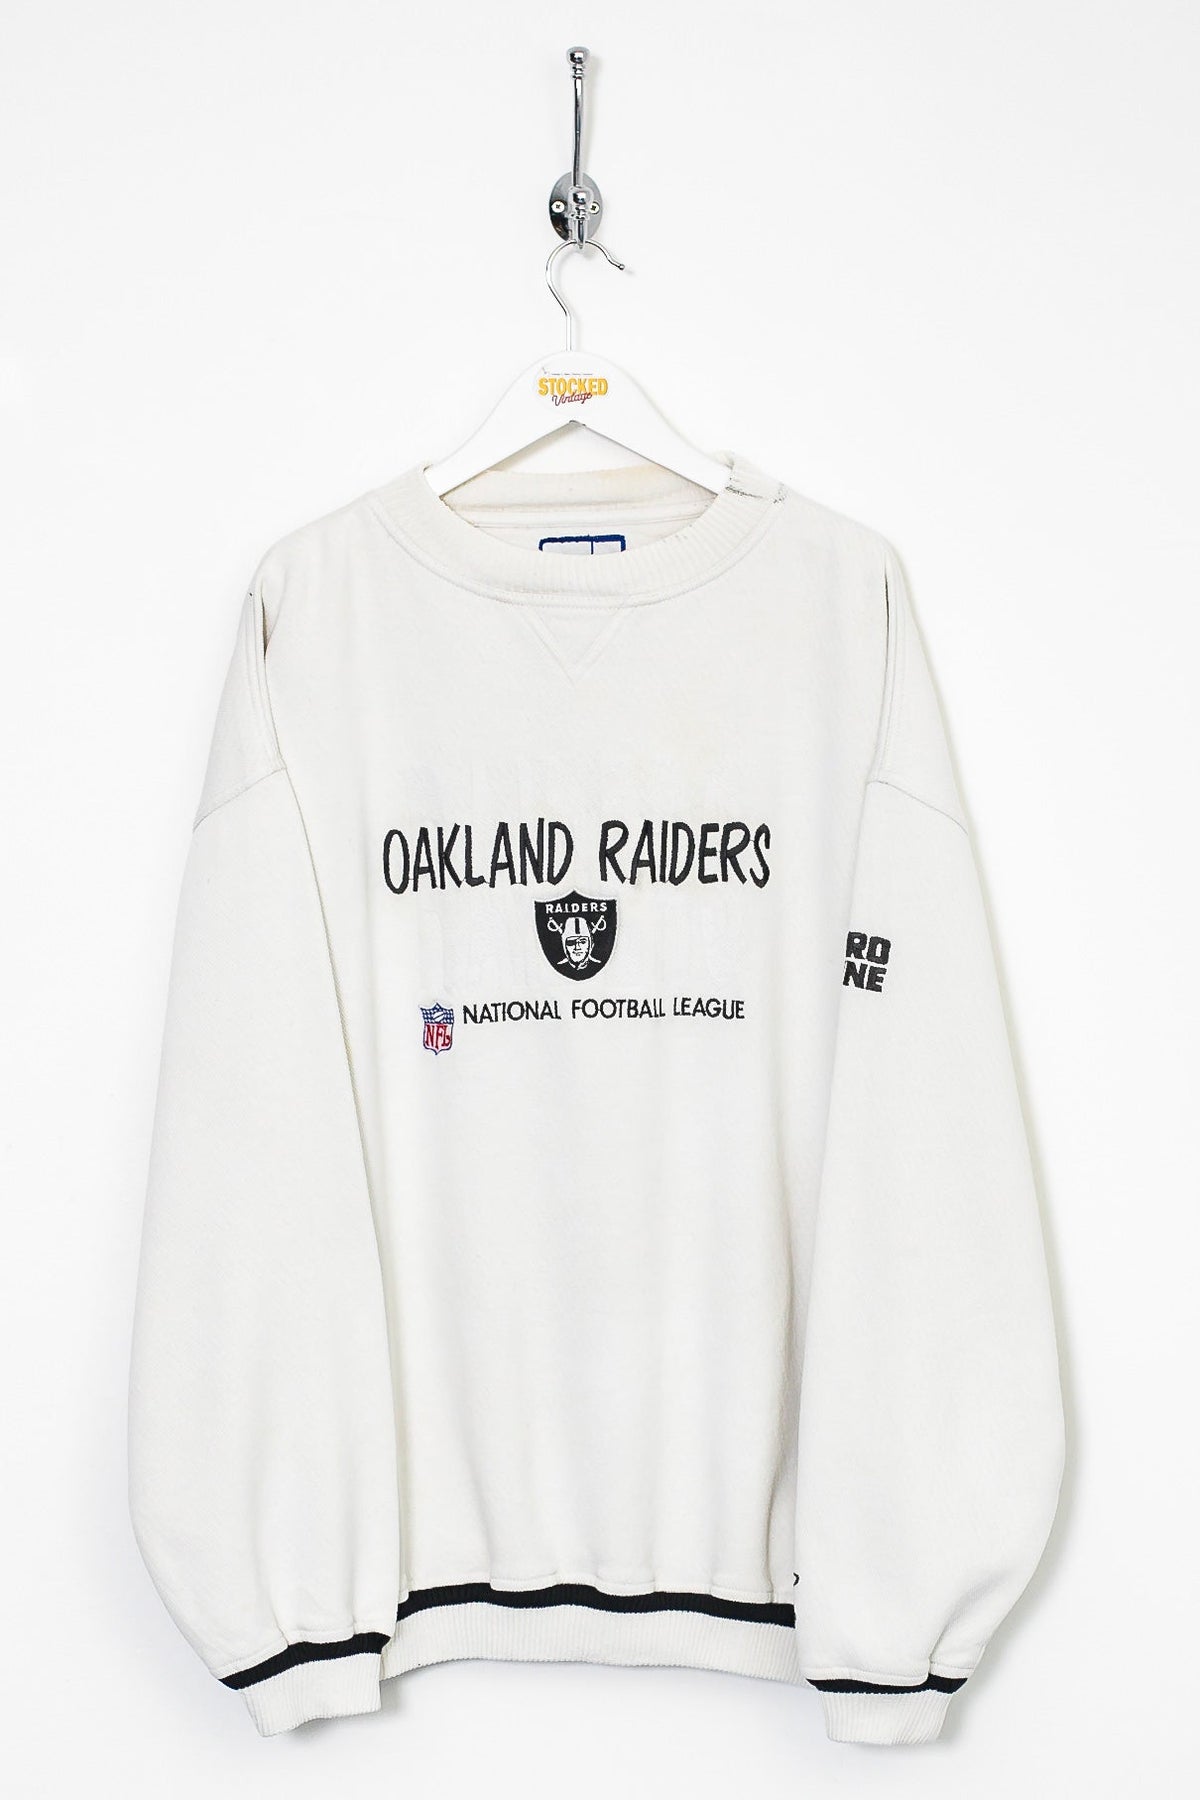 90s NFL Oakland Raiders Sweatshirt (XL)